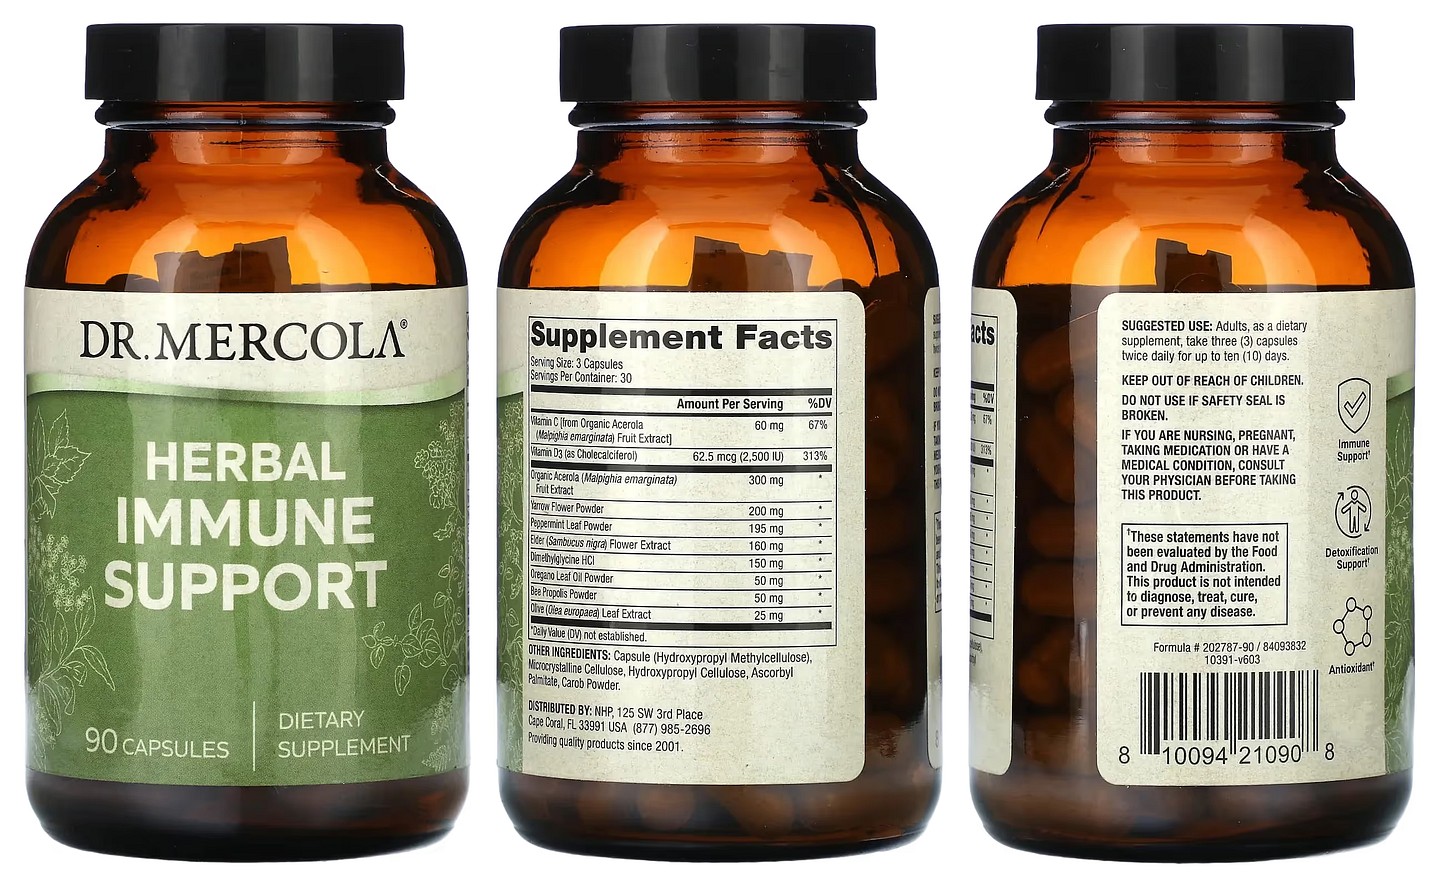 Dr. Mercola, Herbal Immune Support packaging